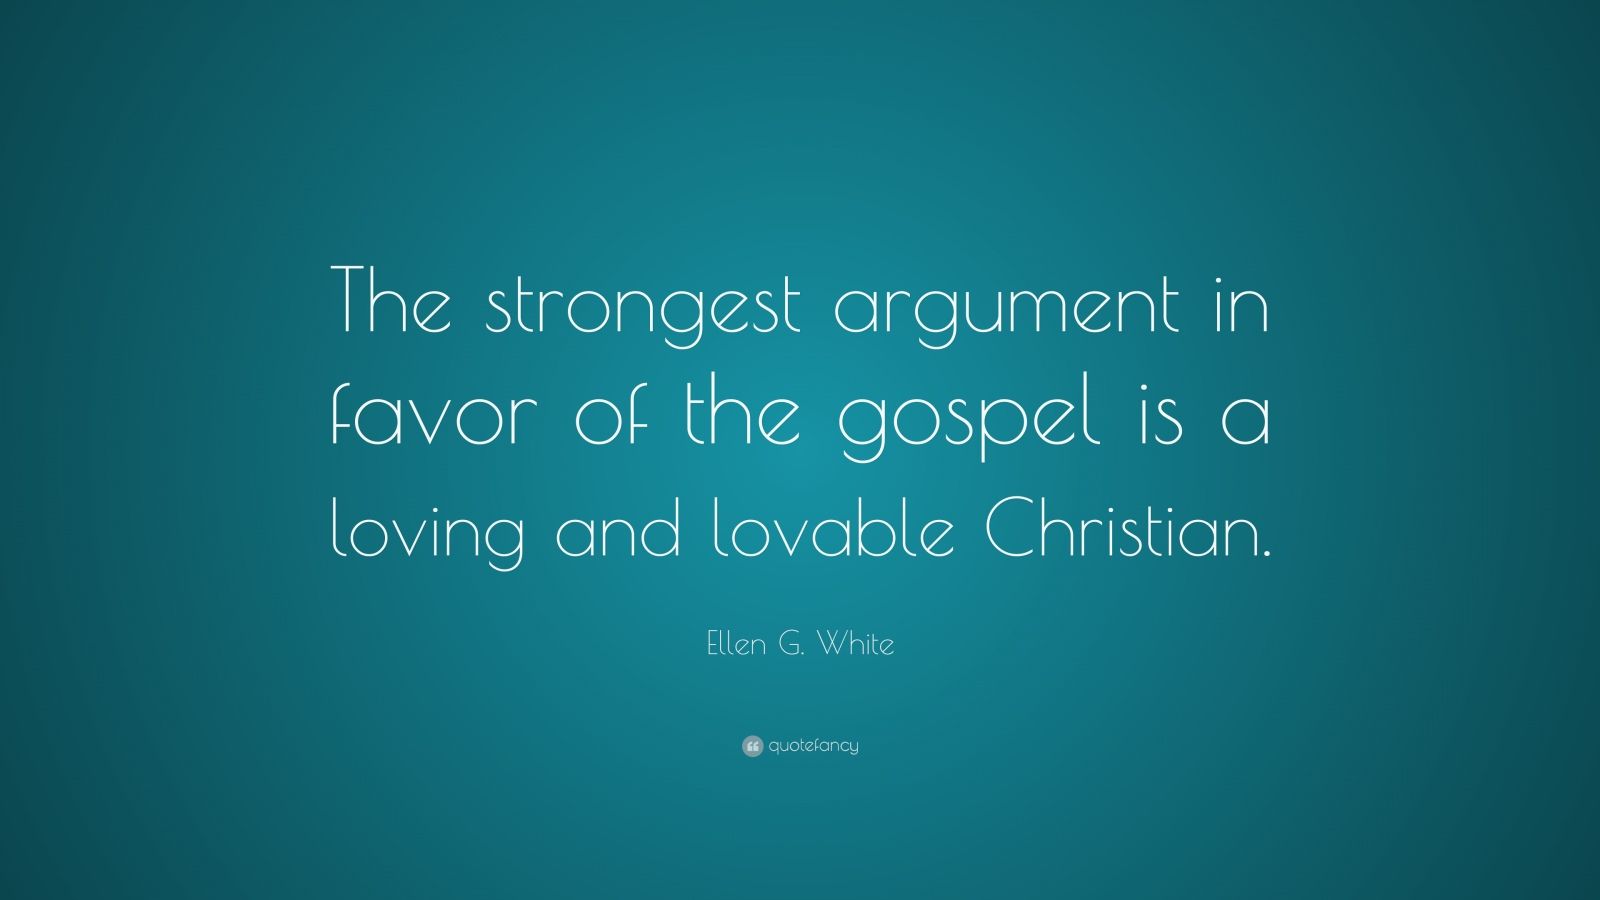 Ellen G. White Quote: “The strongest argument in favor of the gospel is